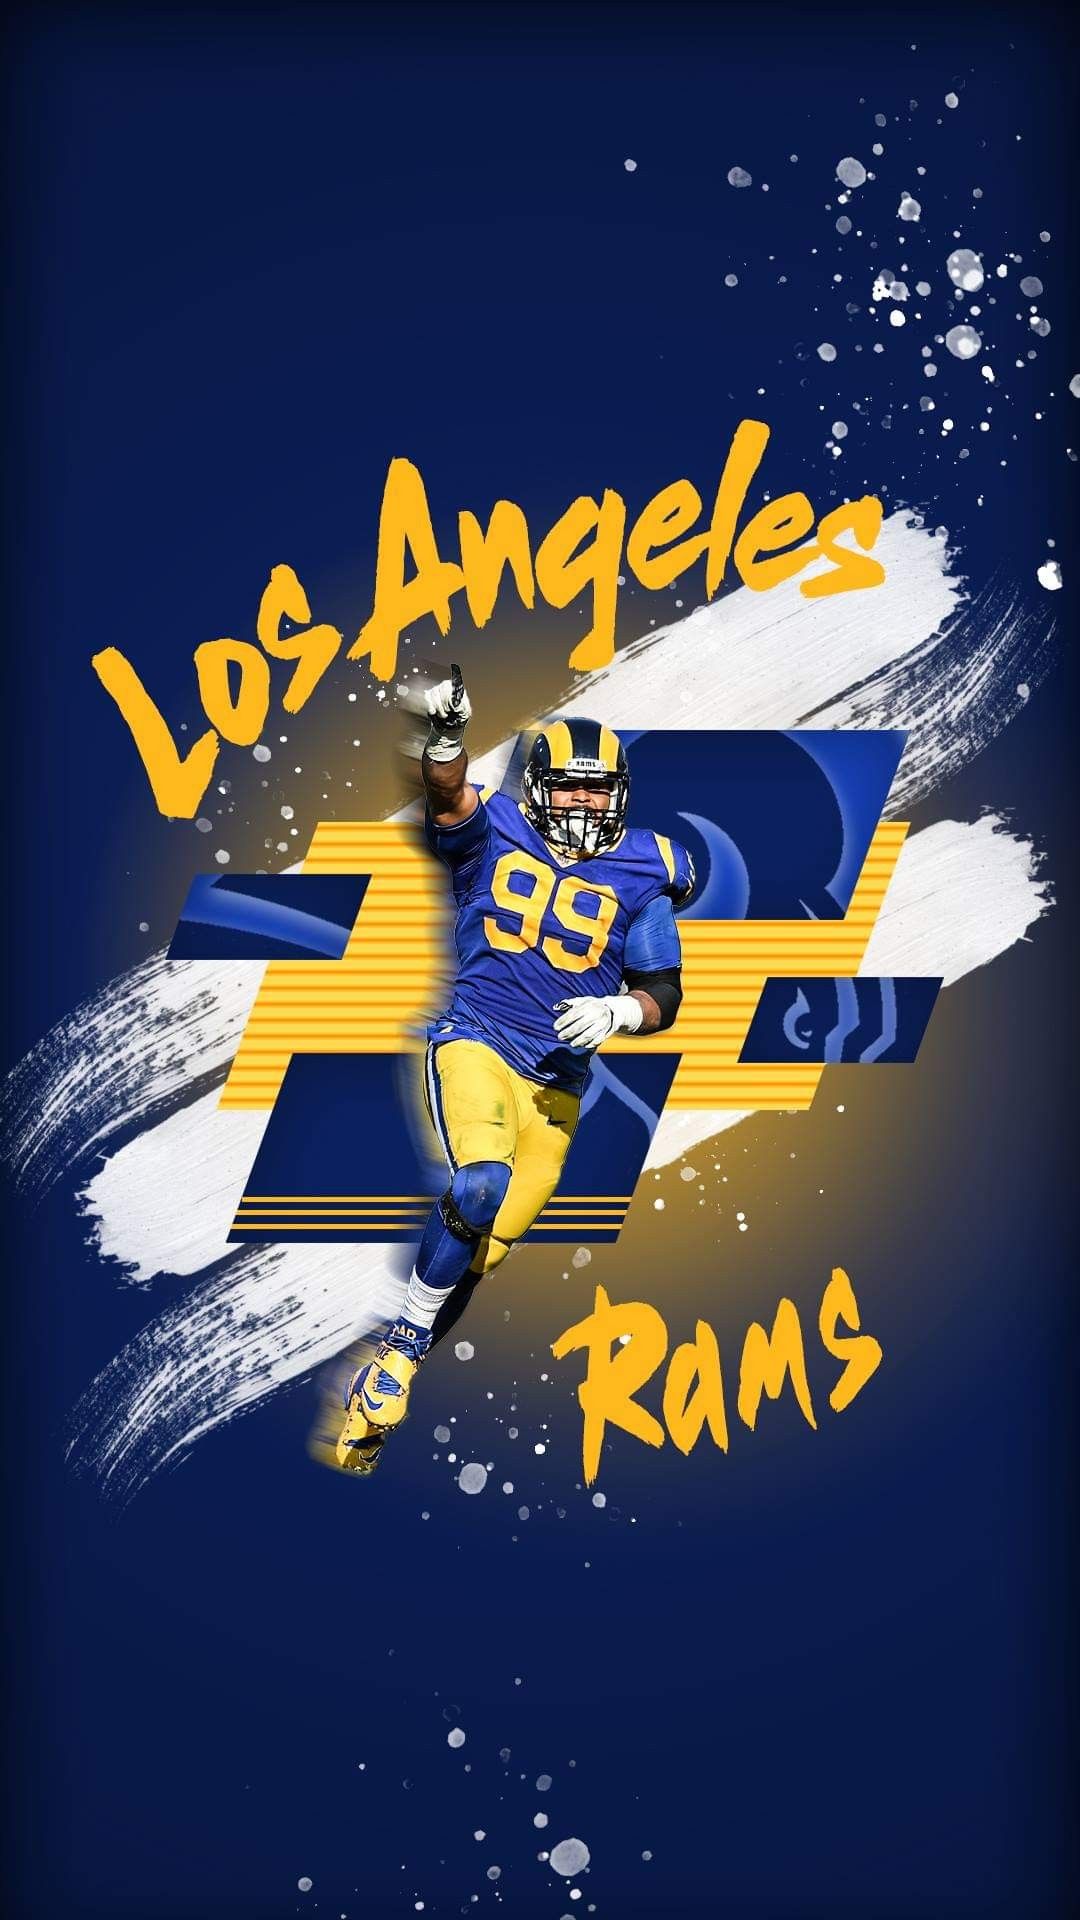 Los Angeles Rams Wallpapers